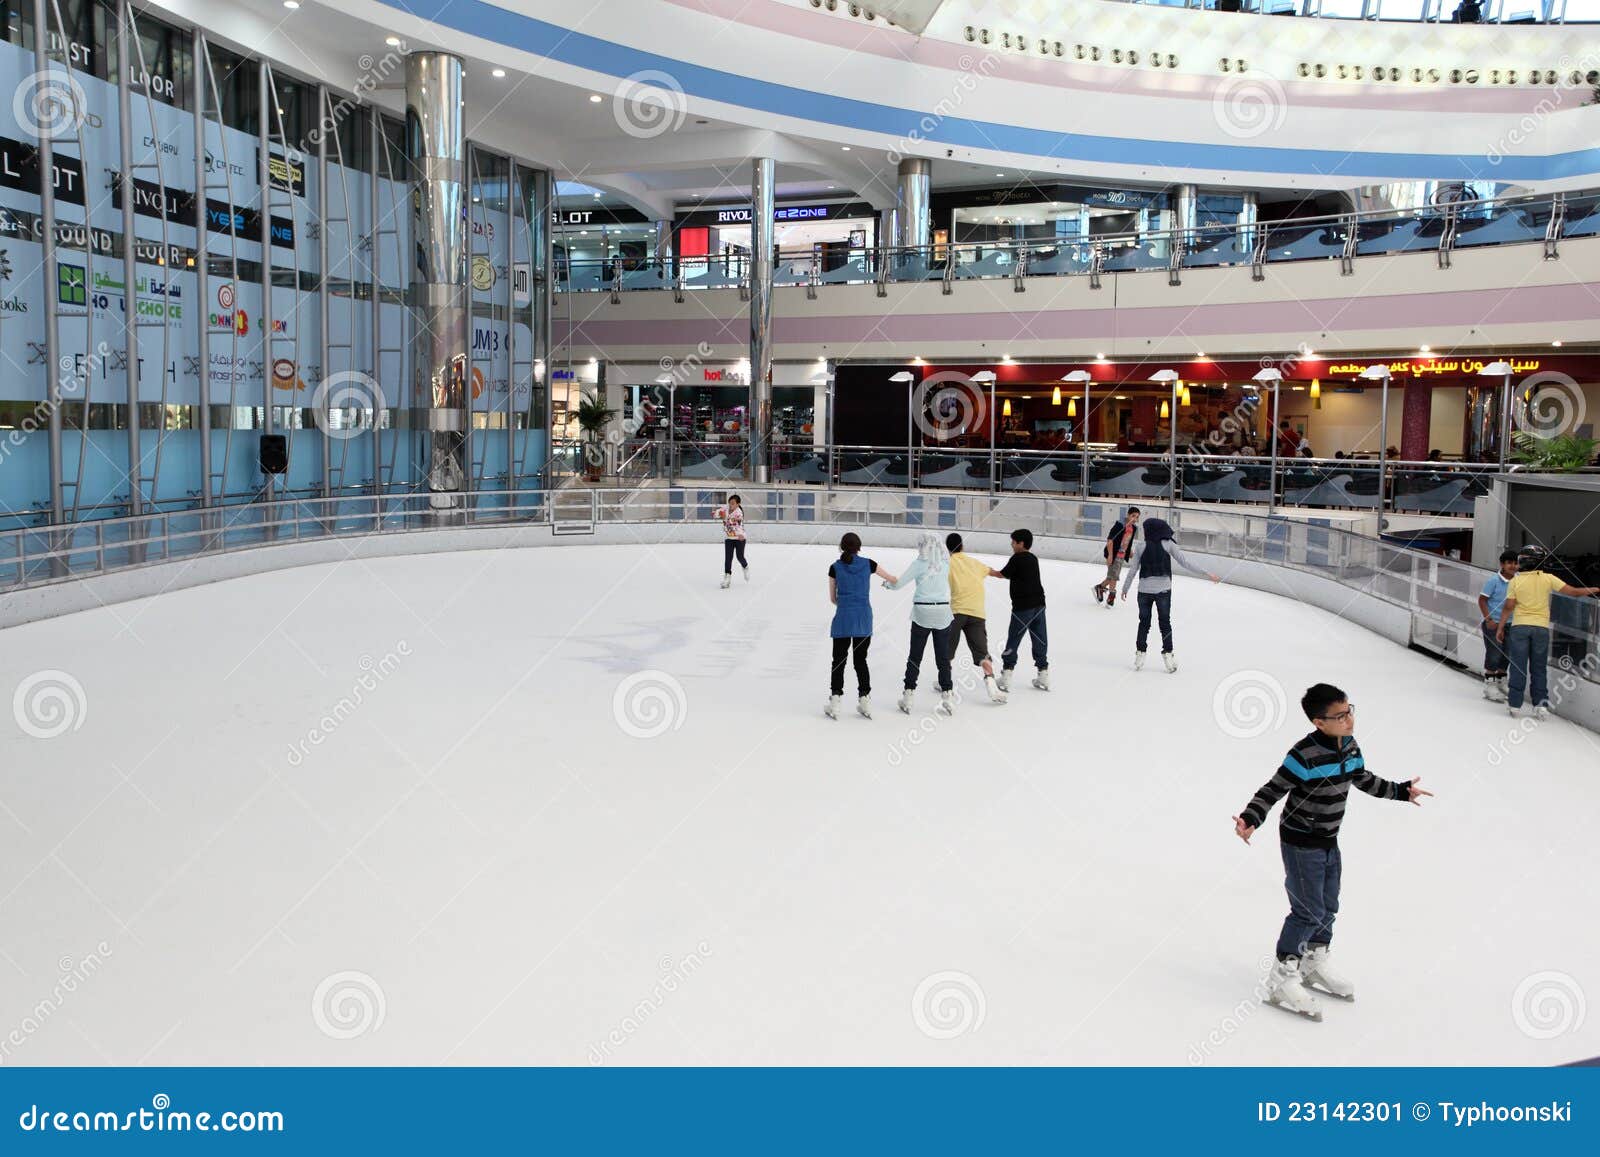 Ice Rink in Marina Mall, Abu Dhabi Editorial Photo - Image of skating